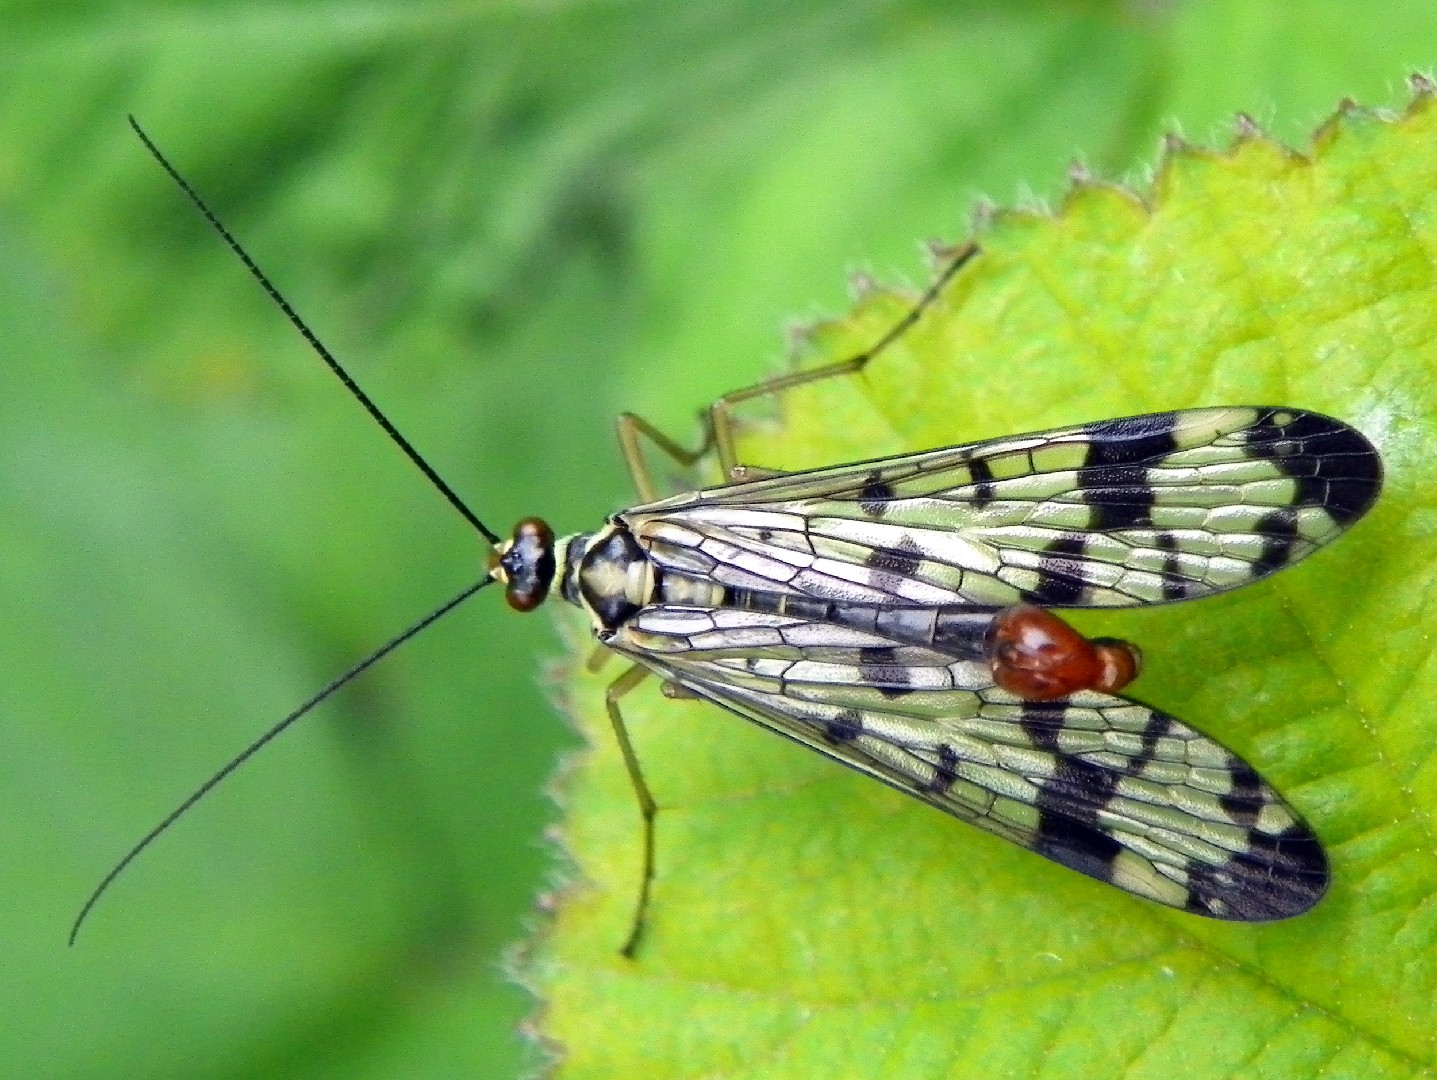 Common scorpion fly (Panorpa communis)